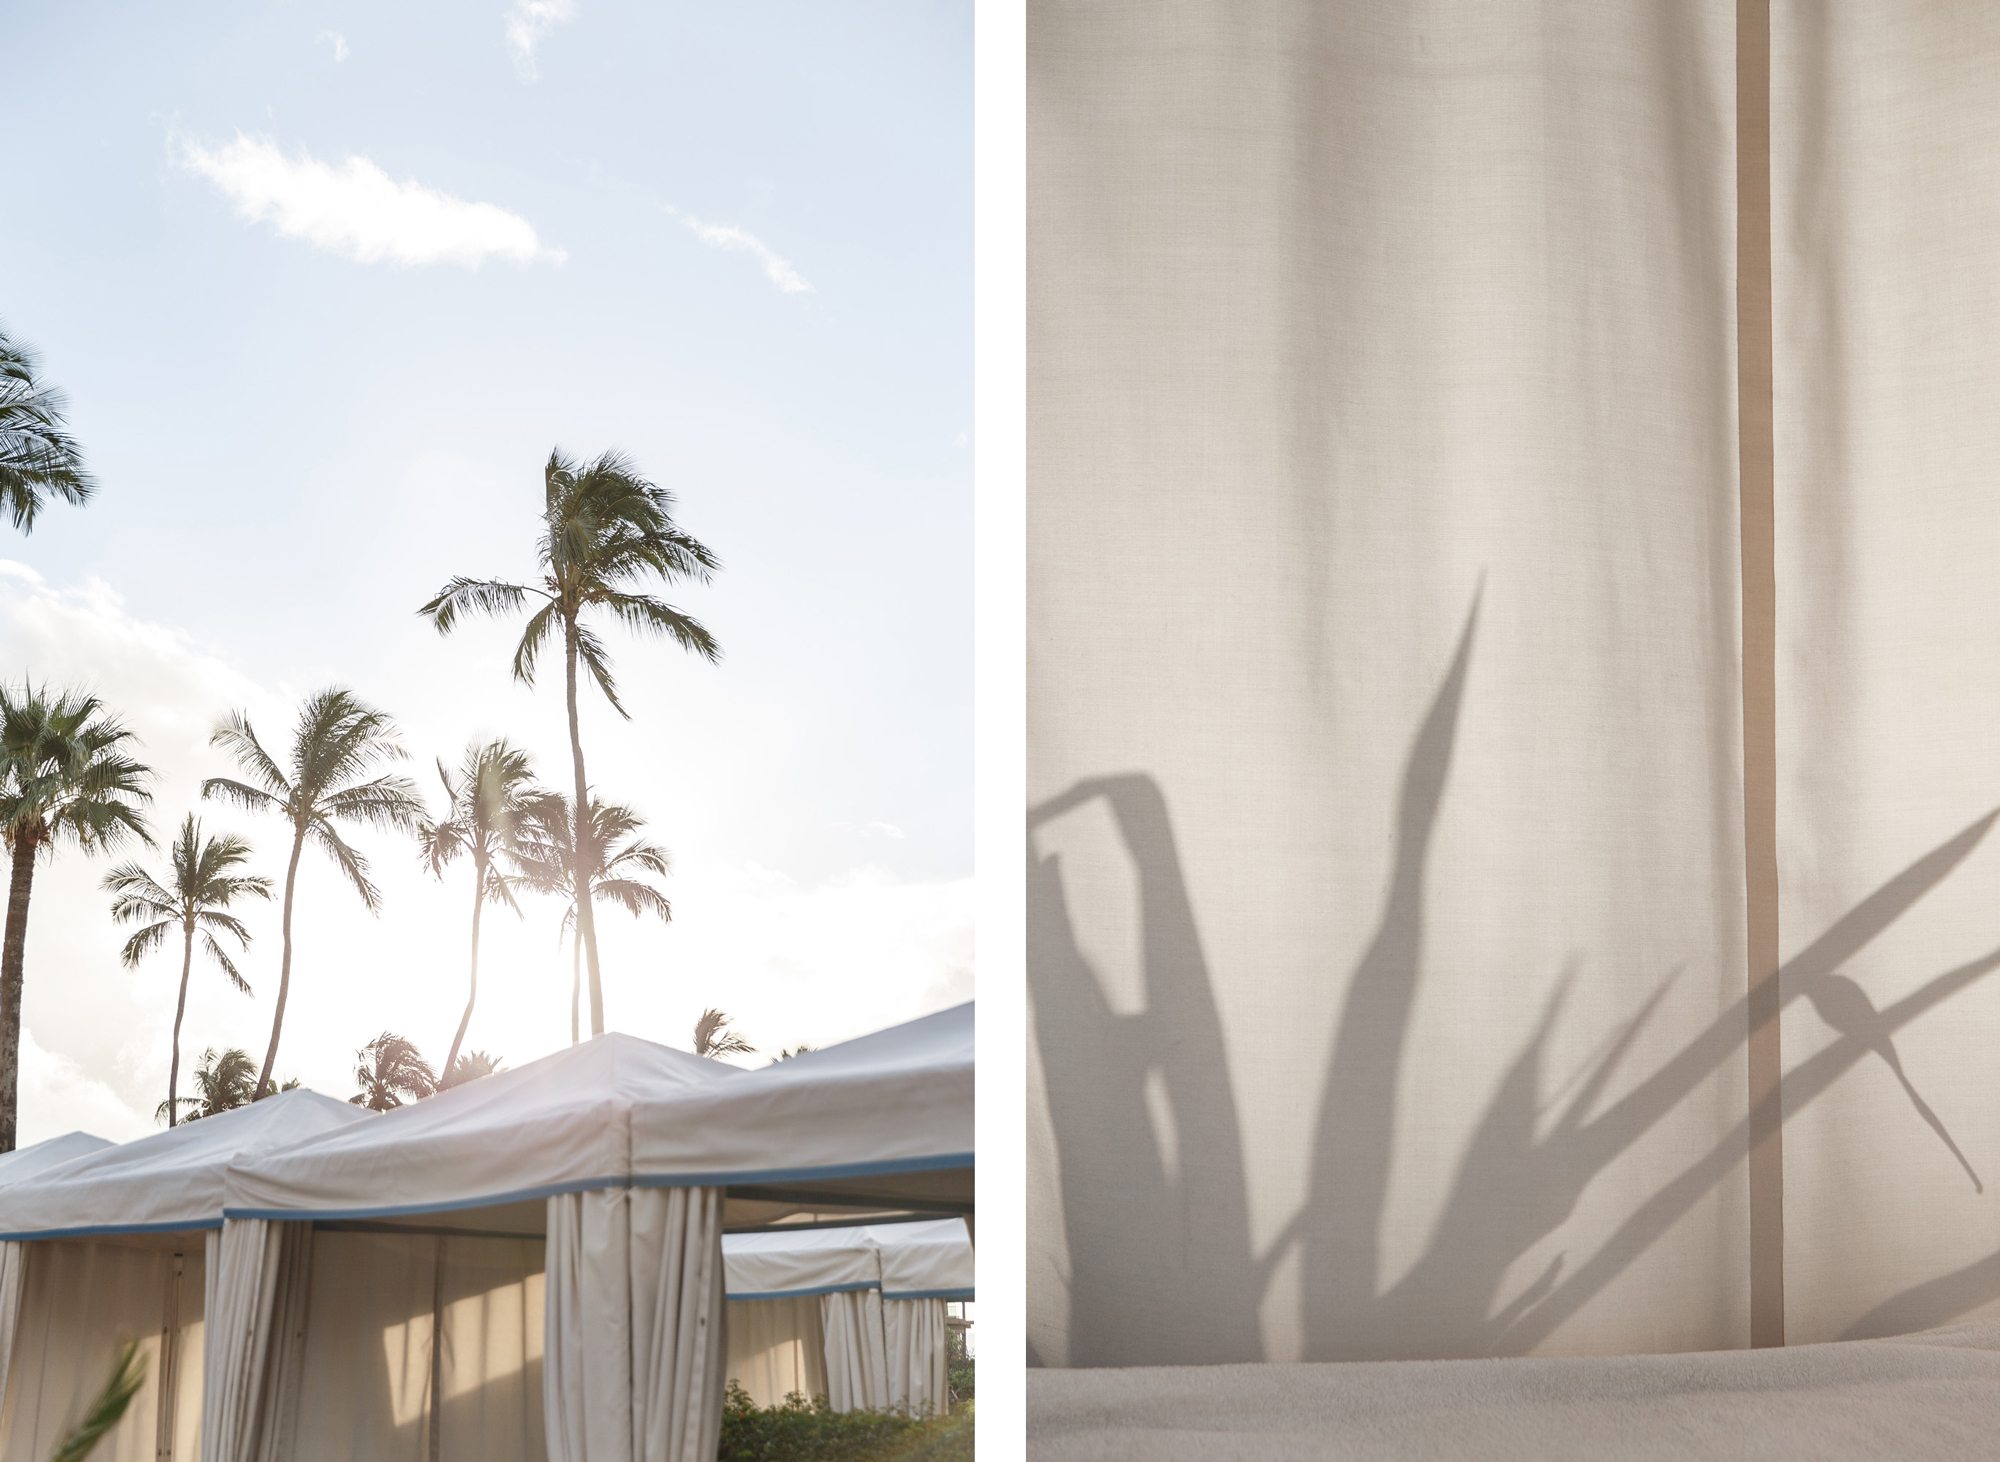 Maui palm trees over cabana, plant shadow comparison